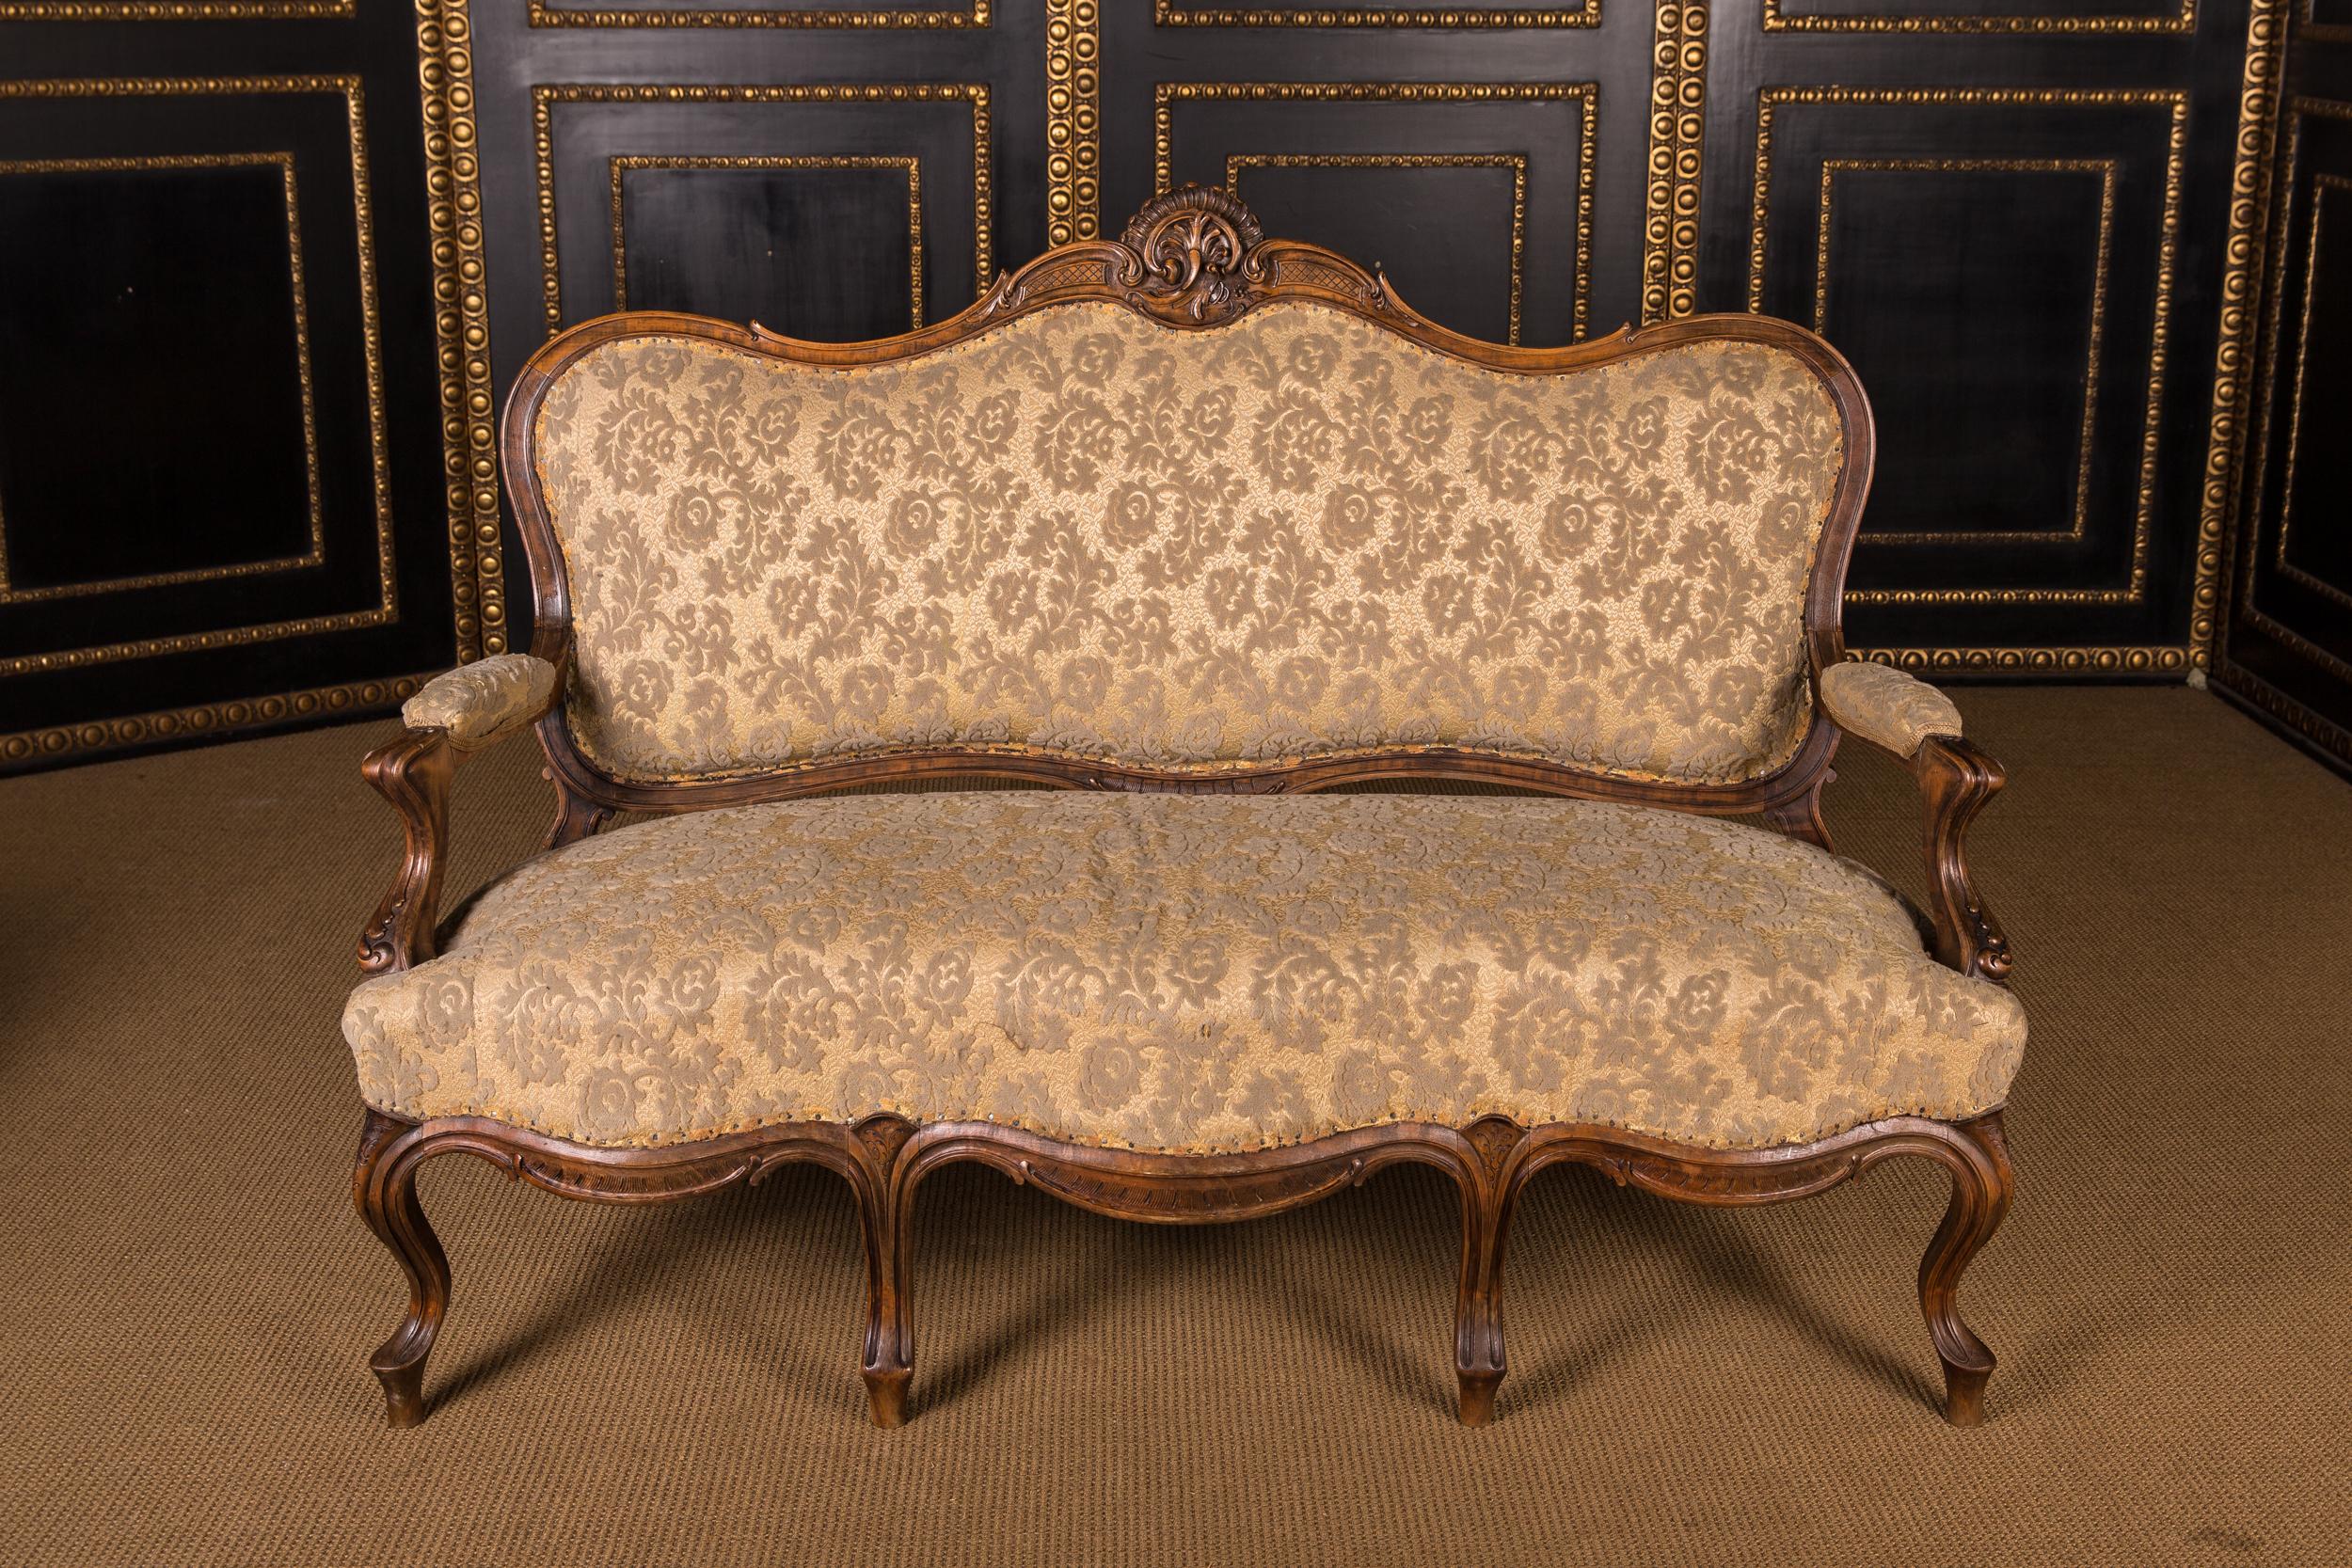 German Castle Worthy Salon Group Sofa and Chairs Neo Rococo, circa 1860